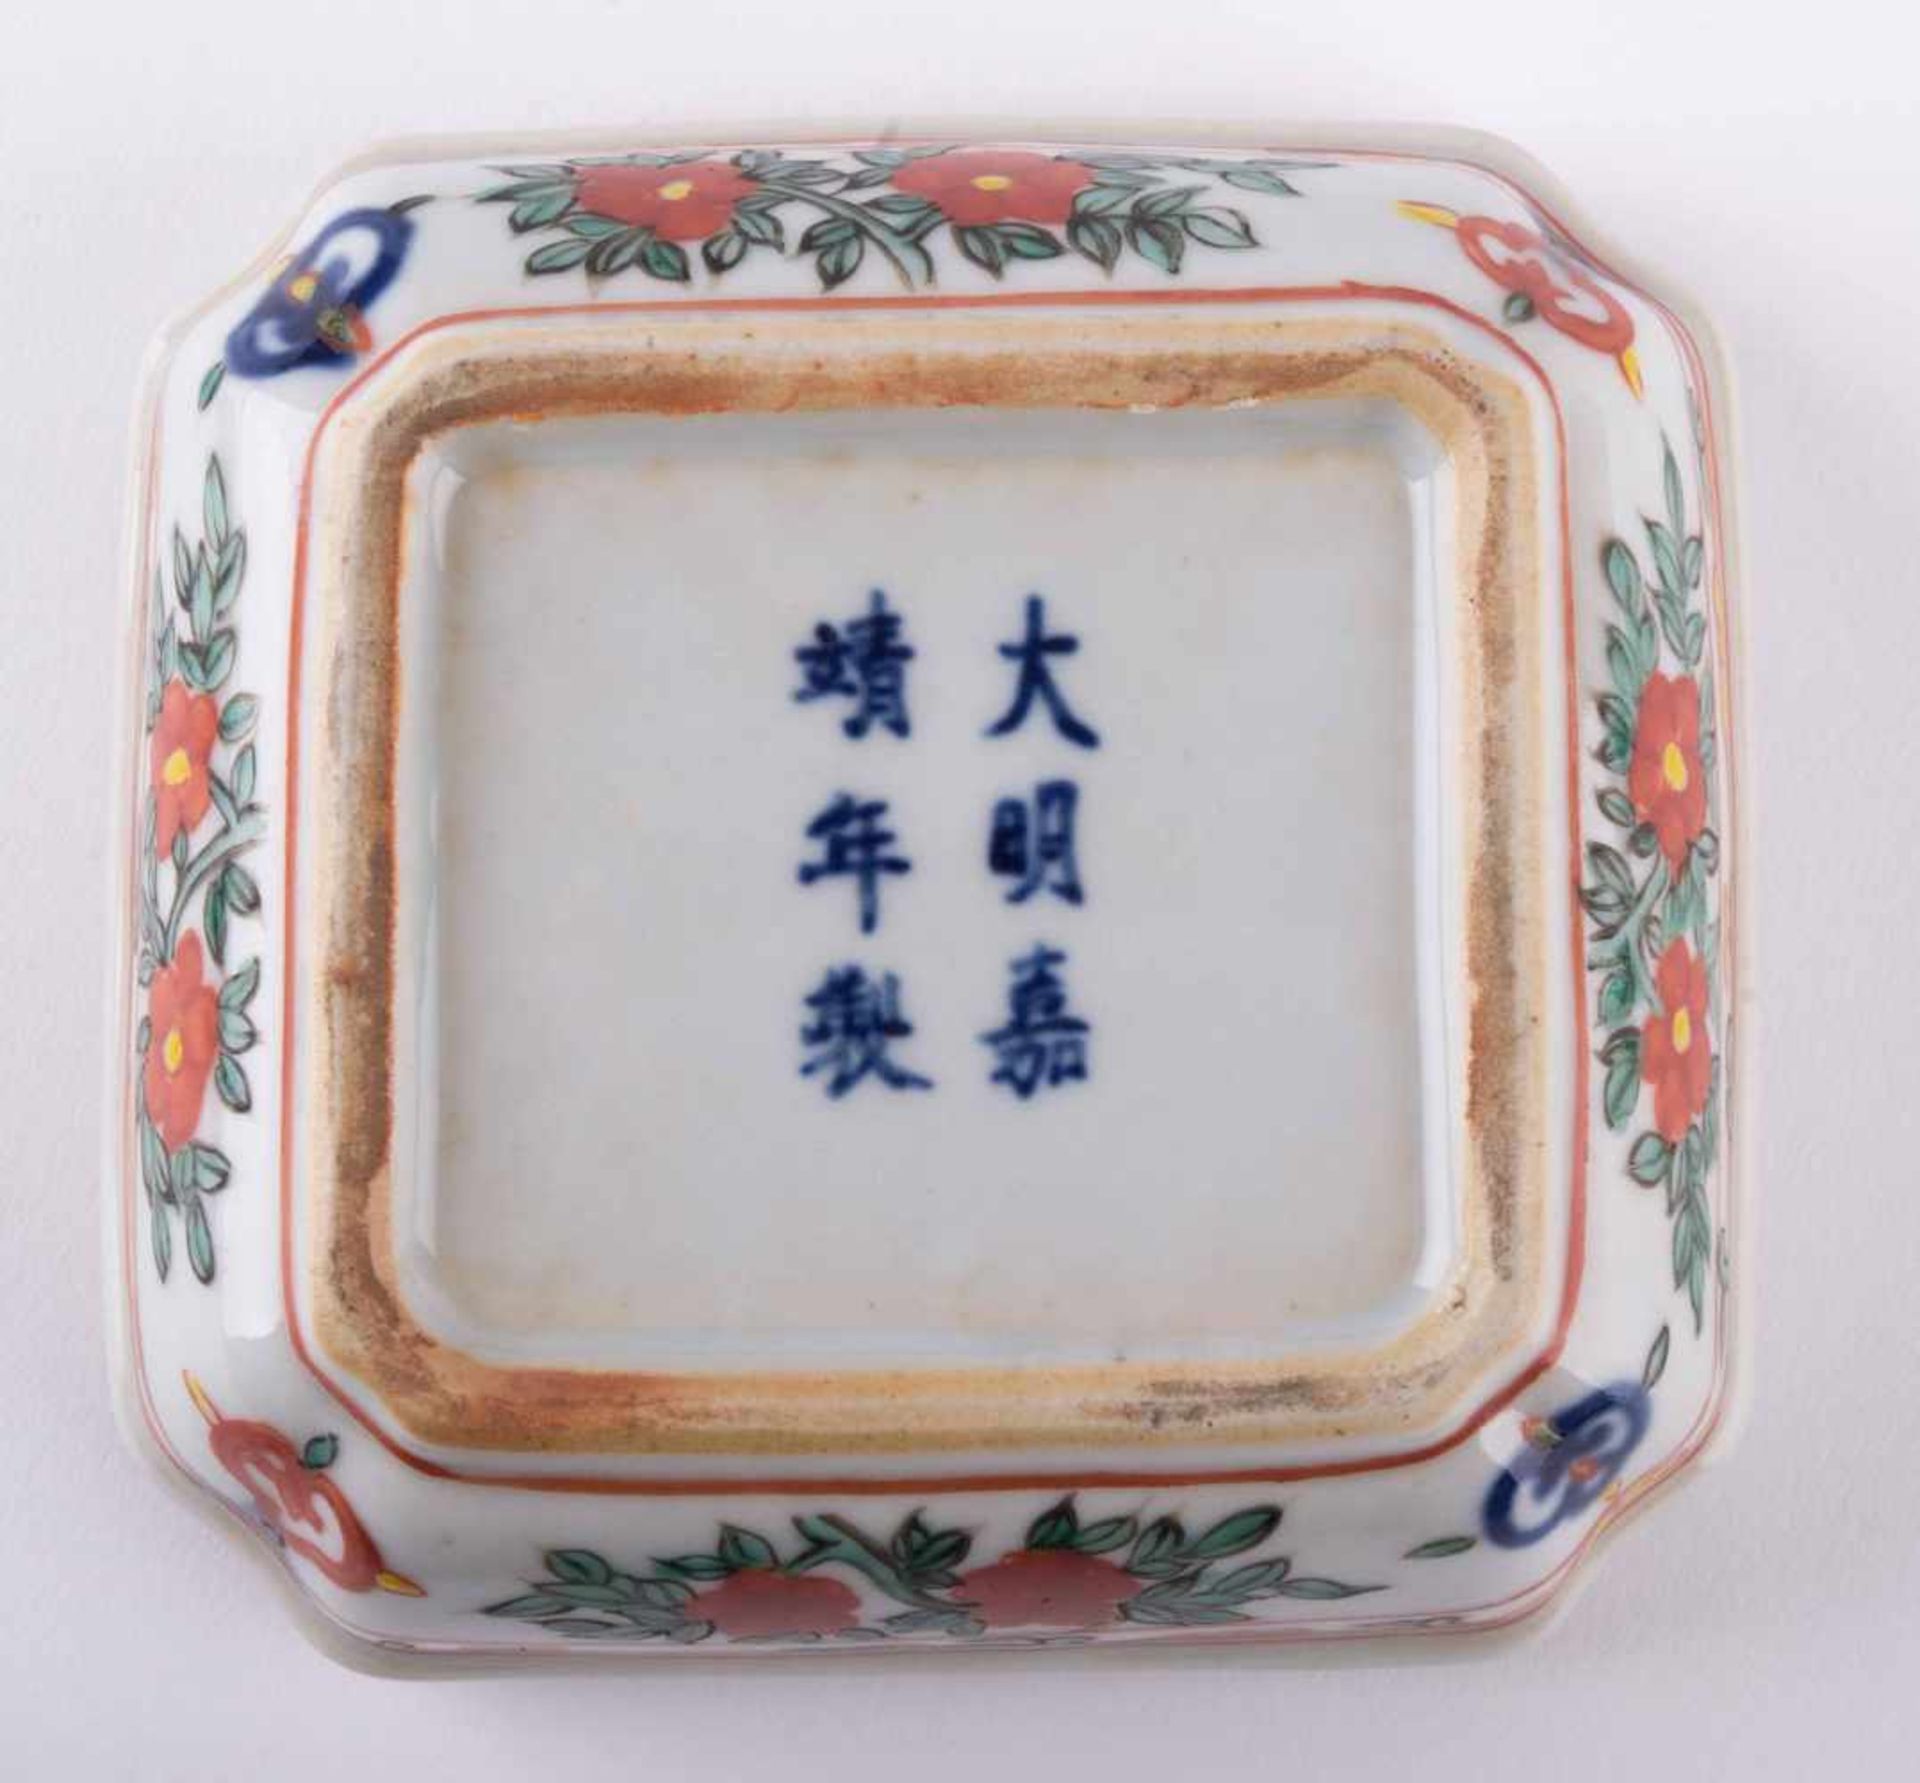 Deckeldose China / Lidded bowl, China alte Dose wohl aus der Kangxi Periode, umlaufend mit - Bild 5 aus 5